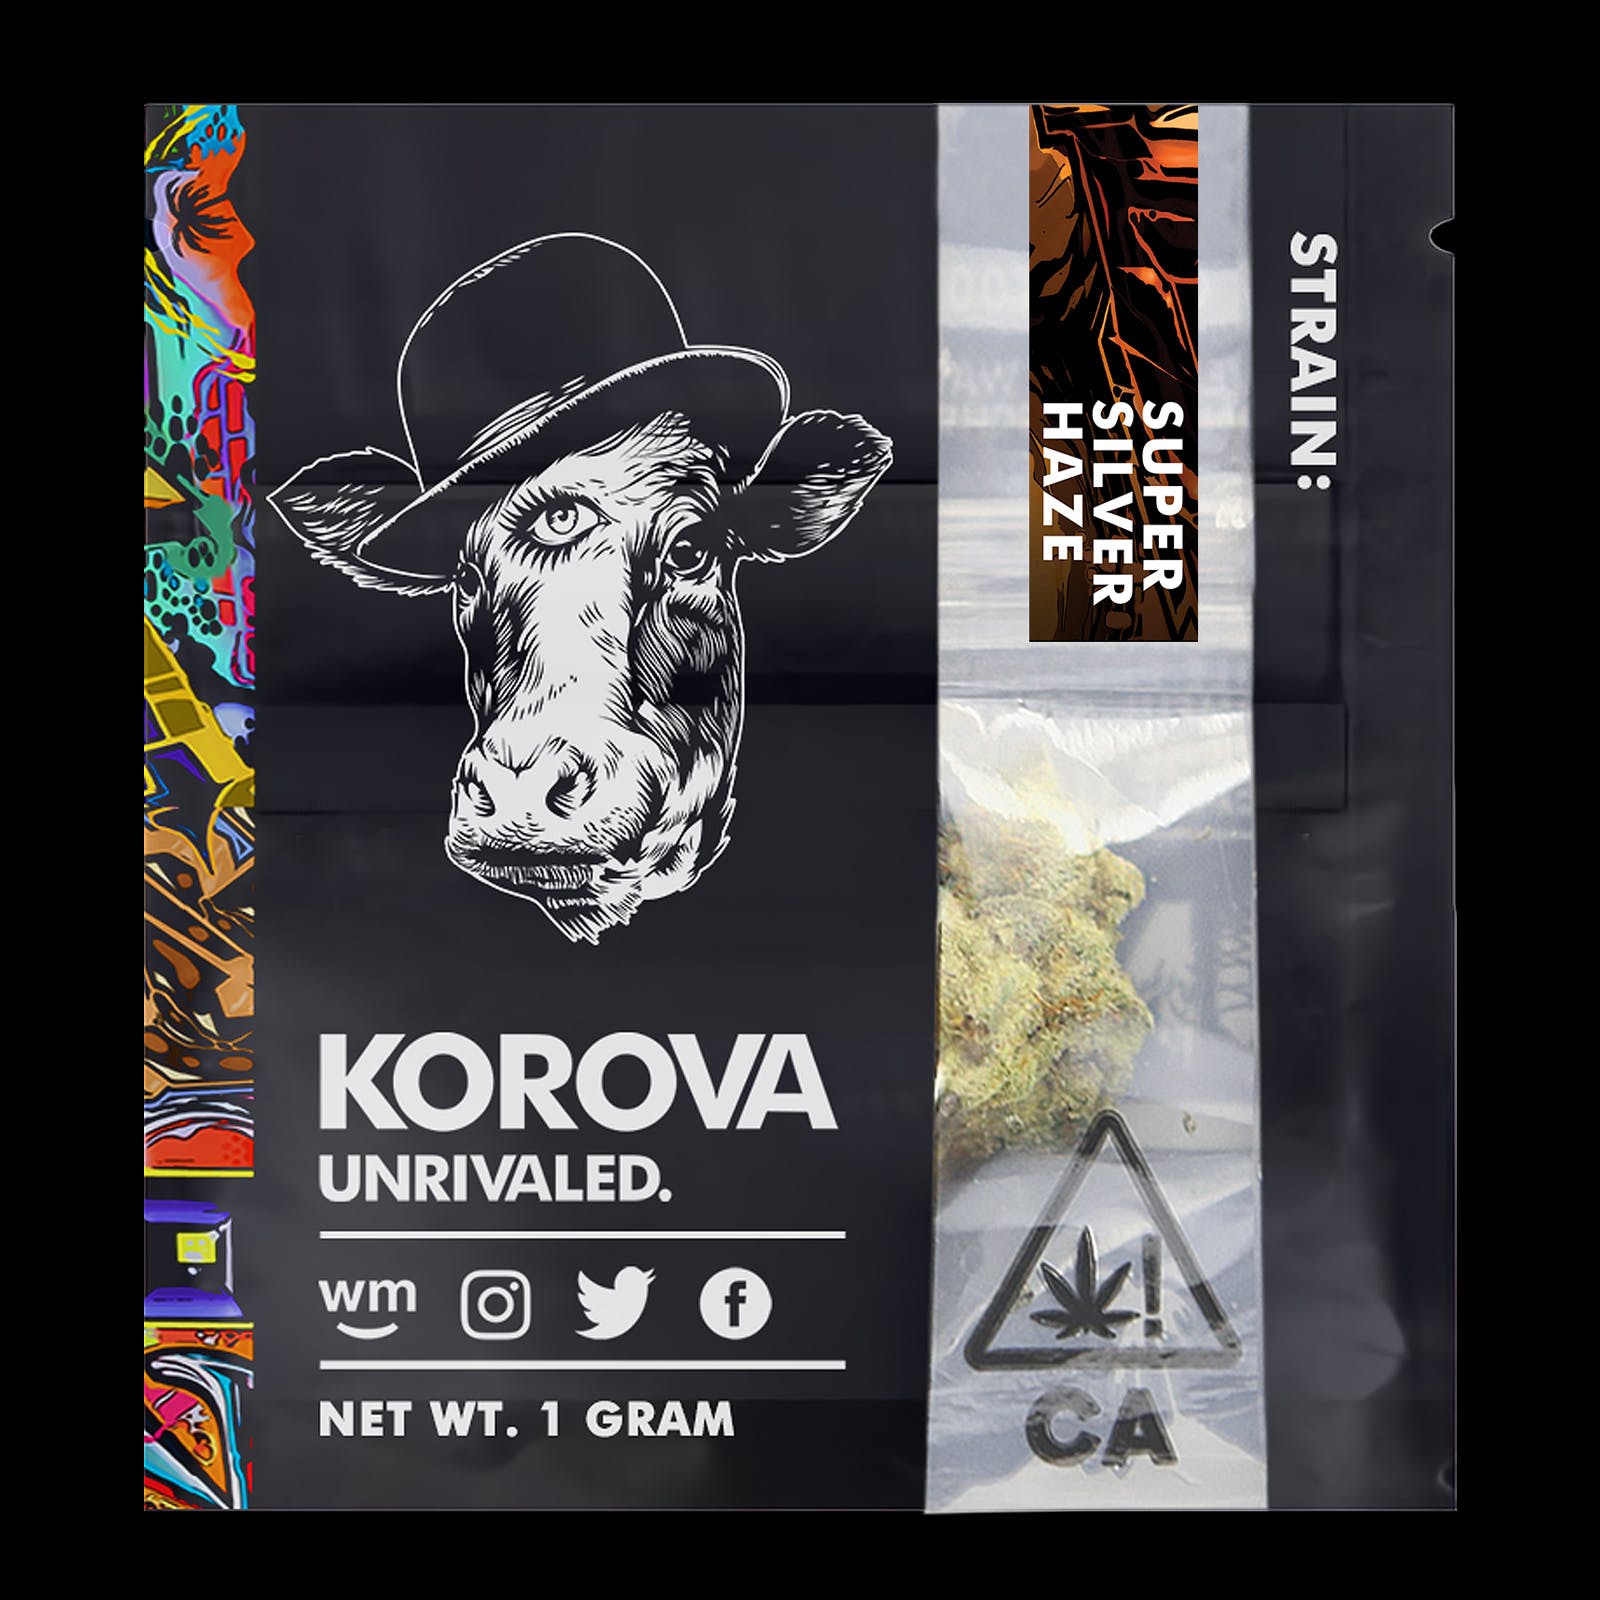 Korova - Super Silver Haze 1g